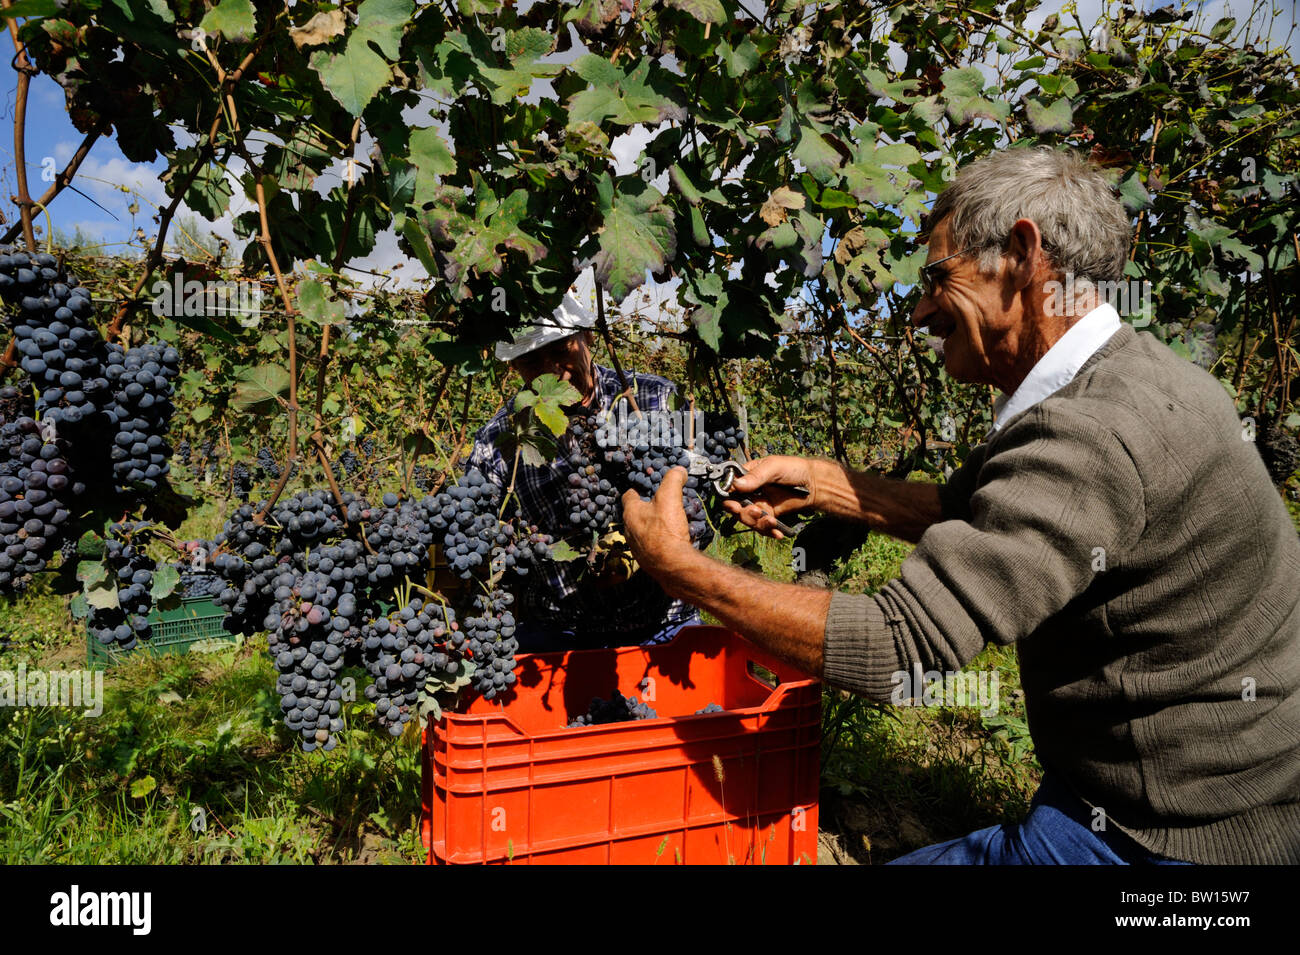 Italy, Basilicata, Roccanova, vineyards, grape harvest, farmer hand picking grapes Stock Photo